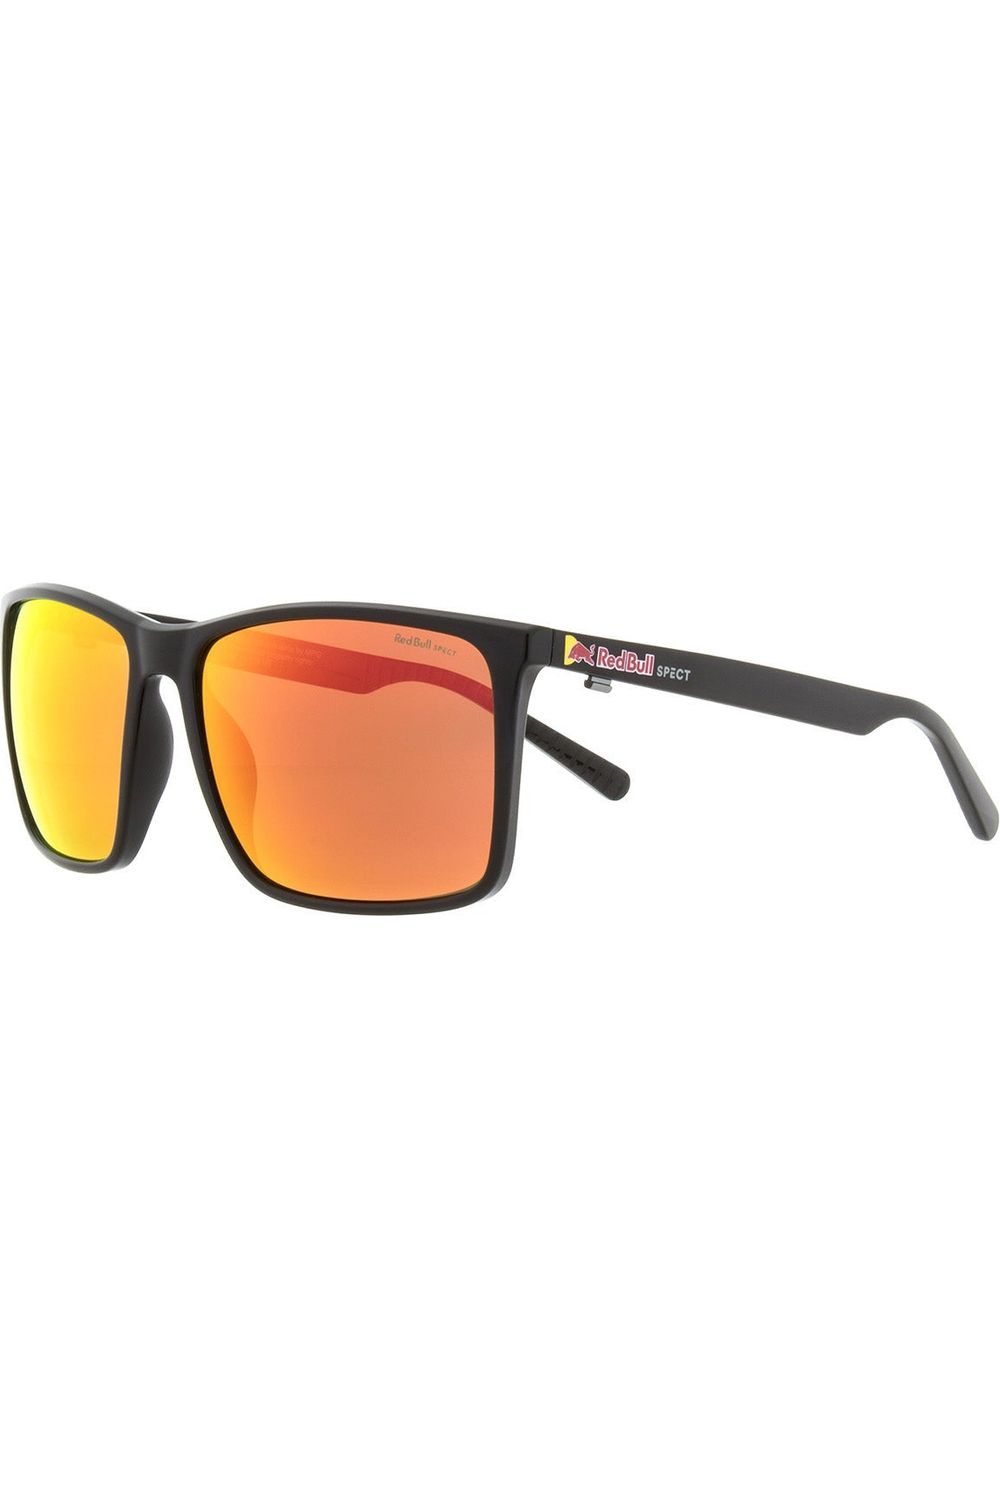 Bow-002P Sunglasses